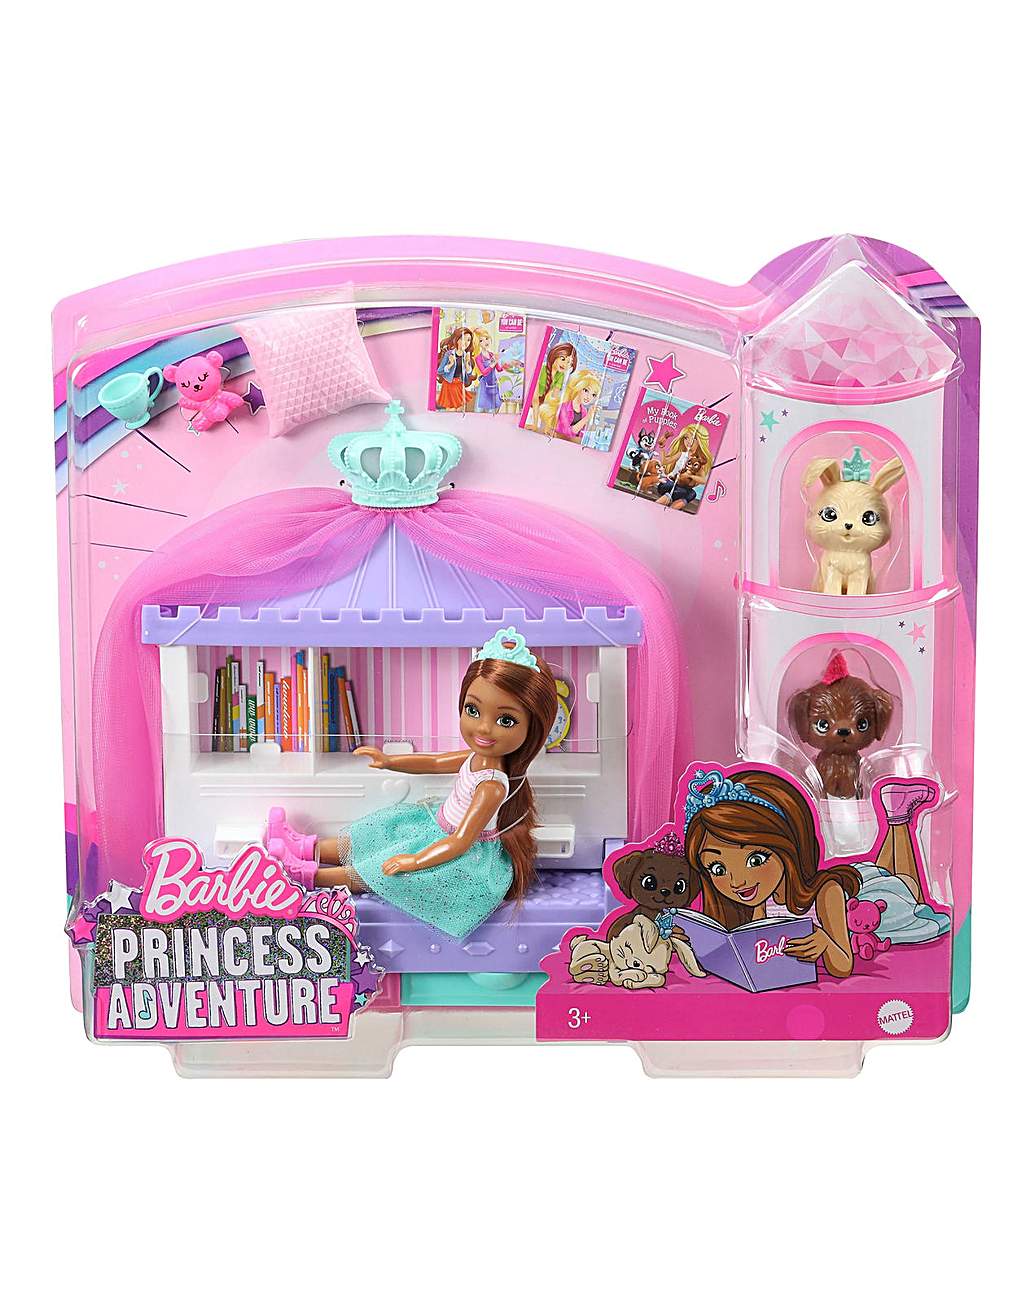 Barbie Princess Adventure Chelsea. J D Williams